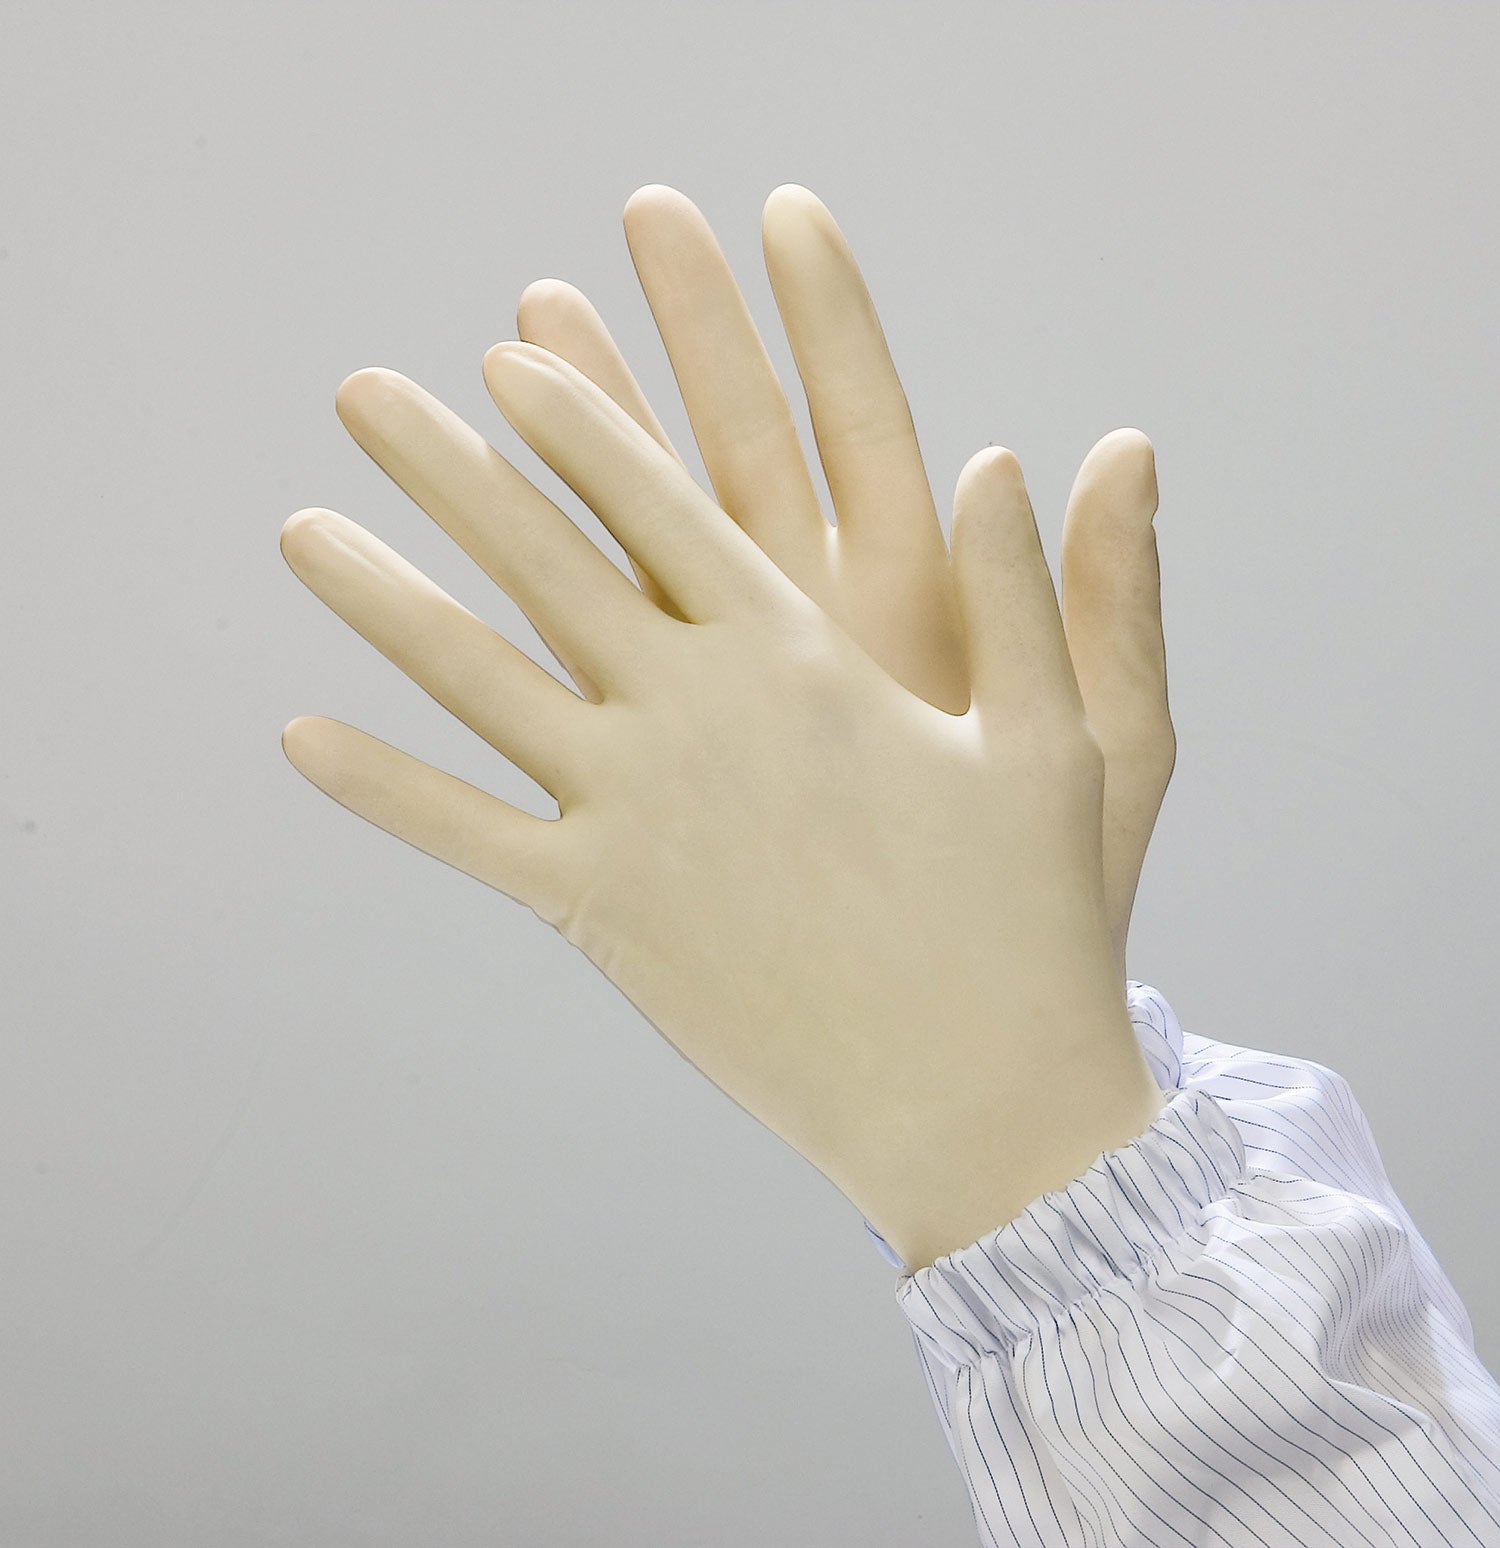 Schaar kalf Productief KM Powder-free Latex Clean Gloves (Class 100)